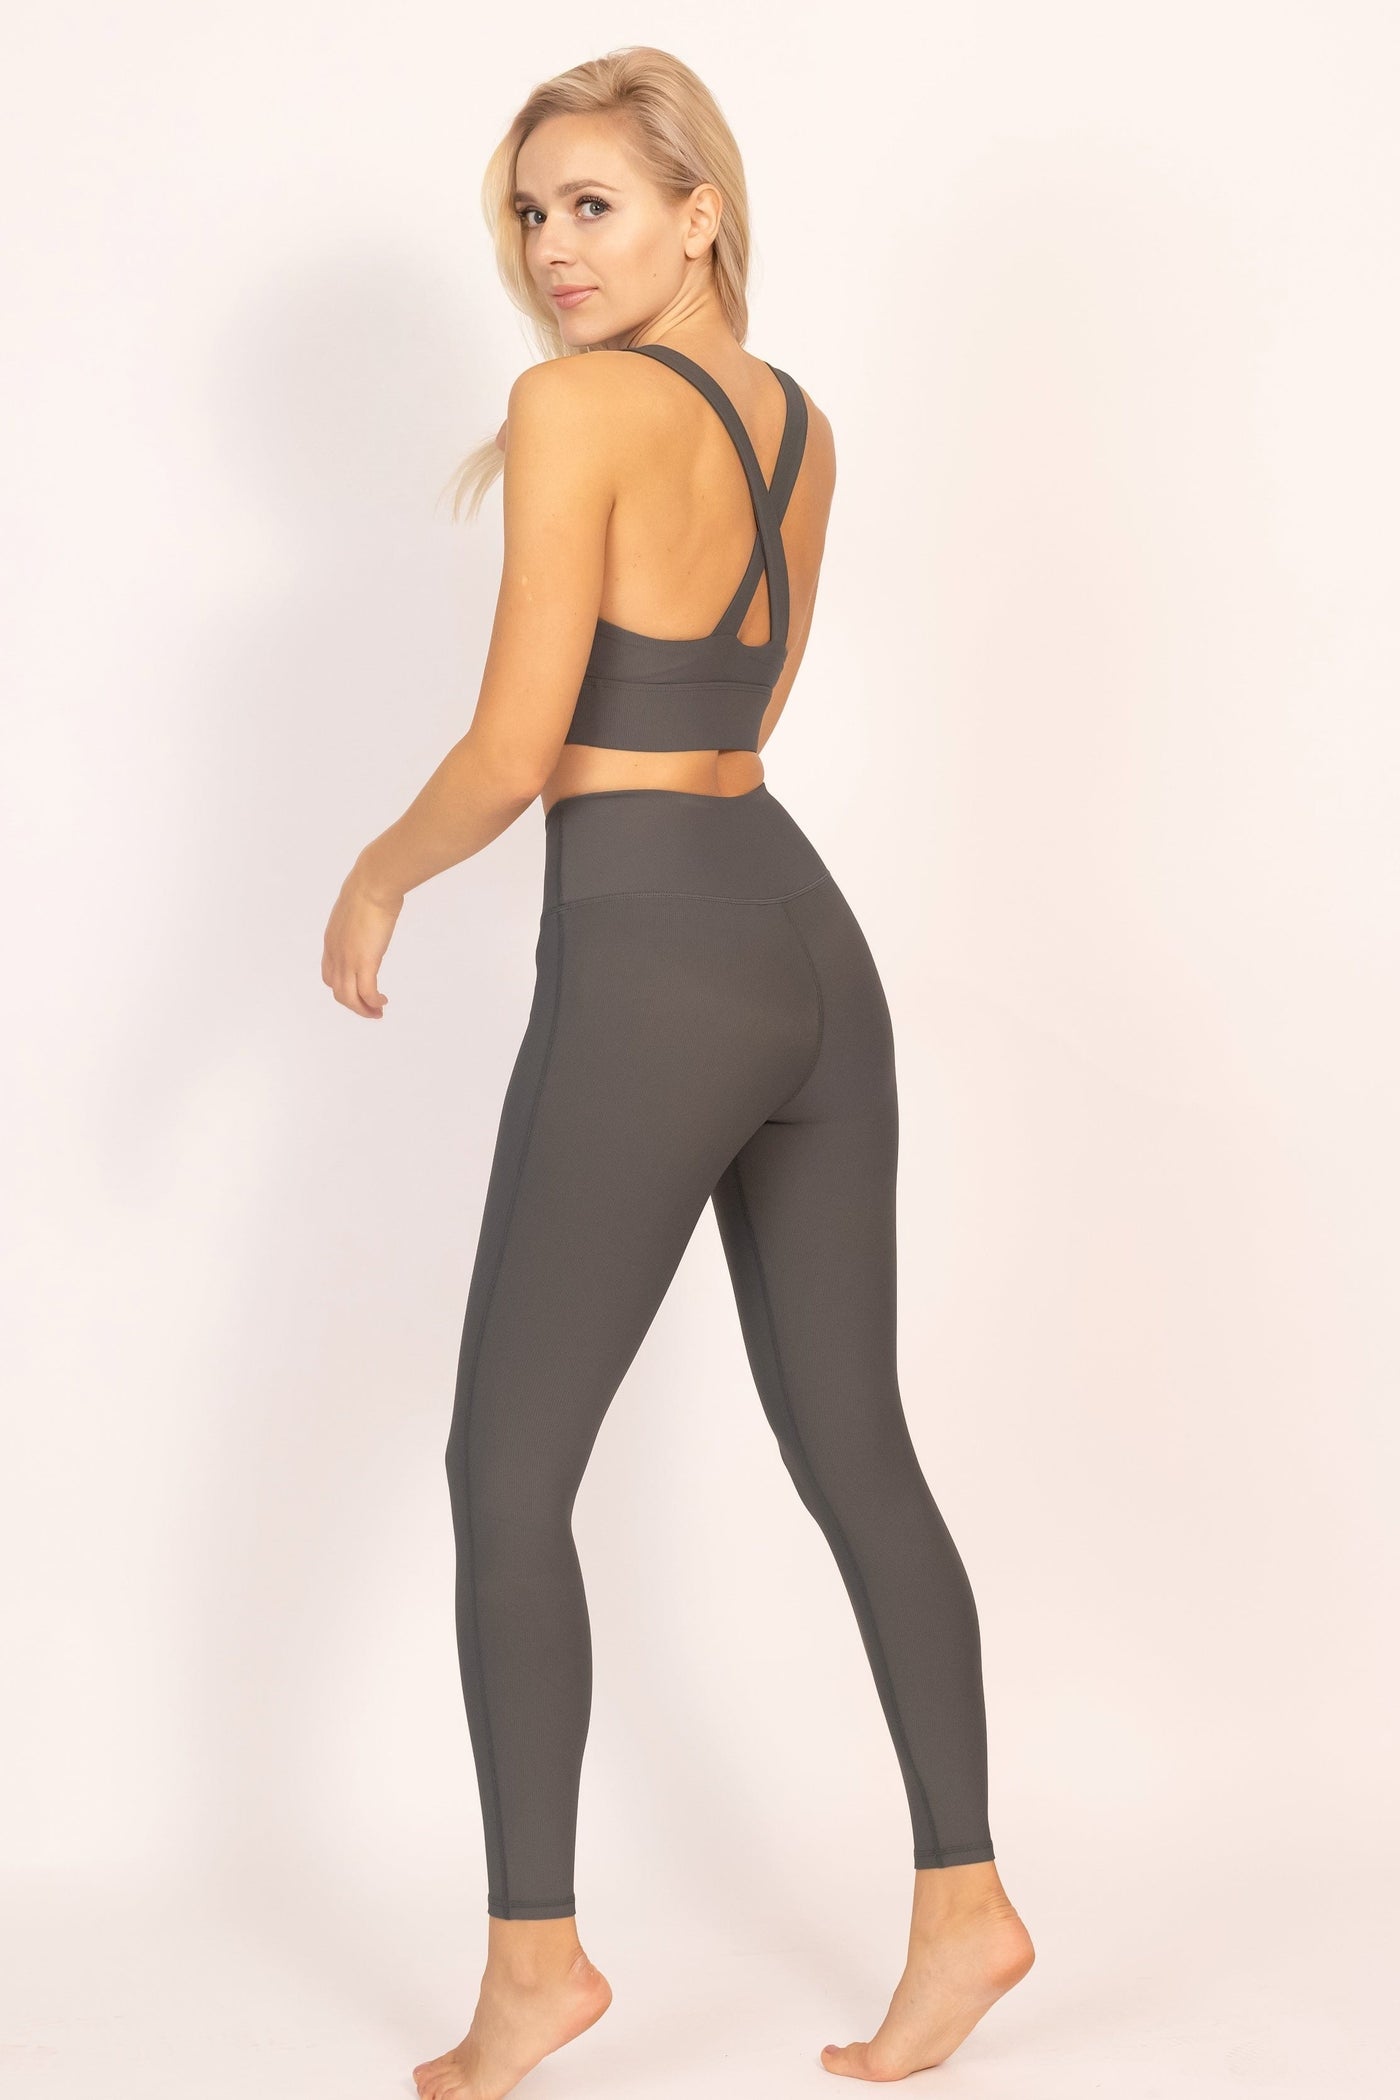 Yoga Grey Legging - Shop women's workout apparel online | Leggings, hoodies, Top & bras | bejactive